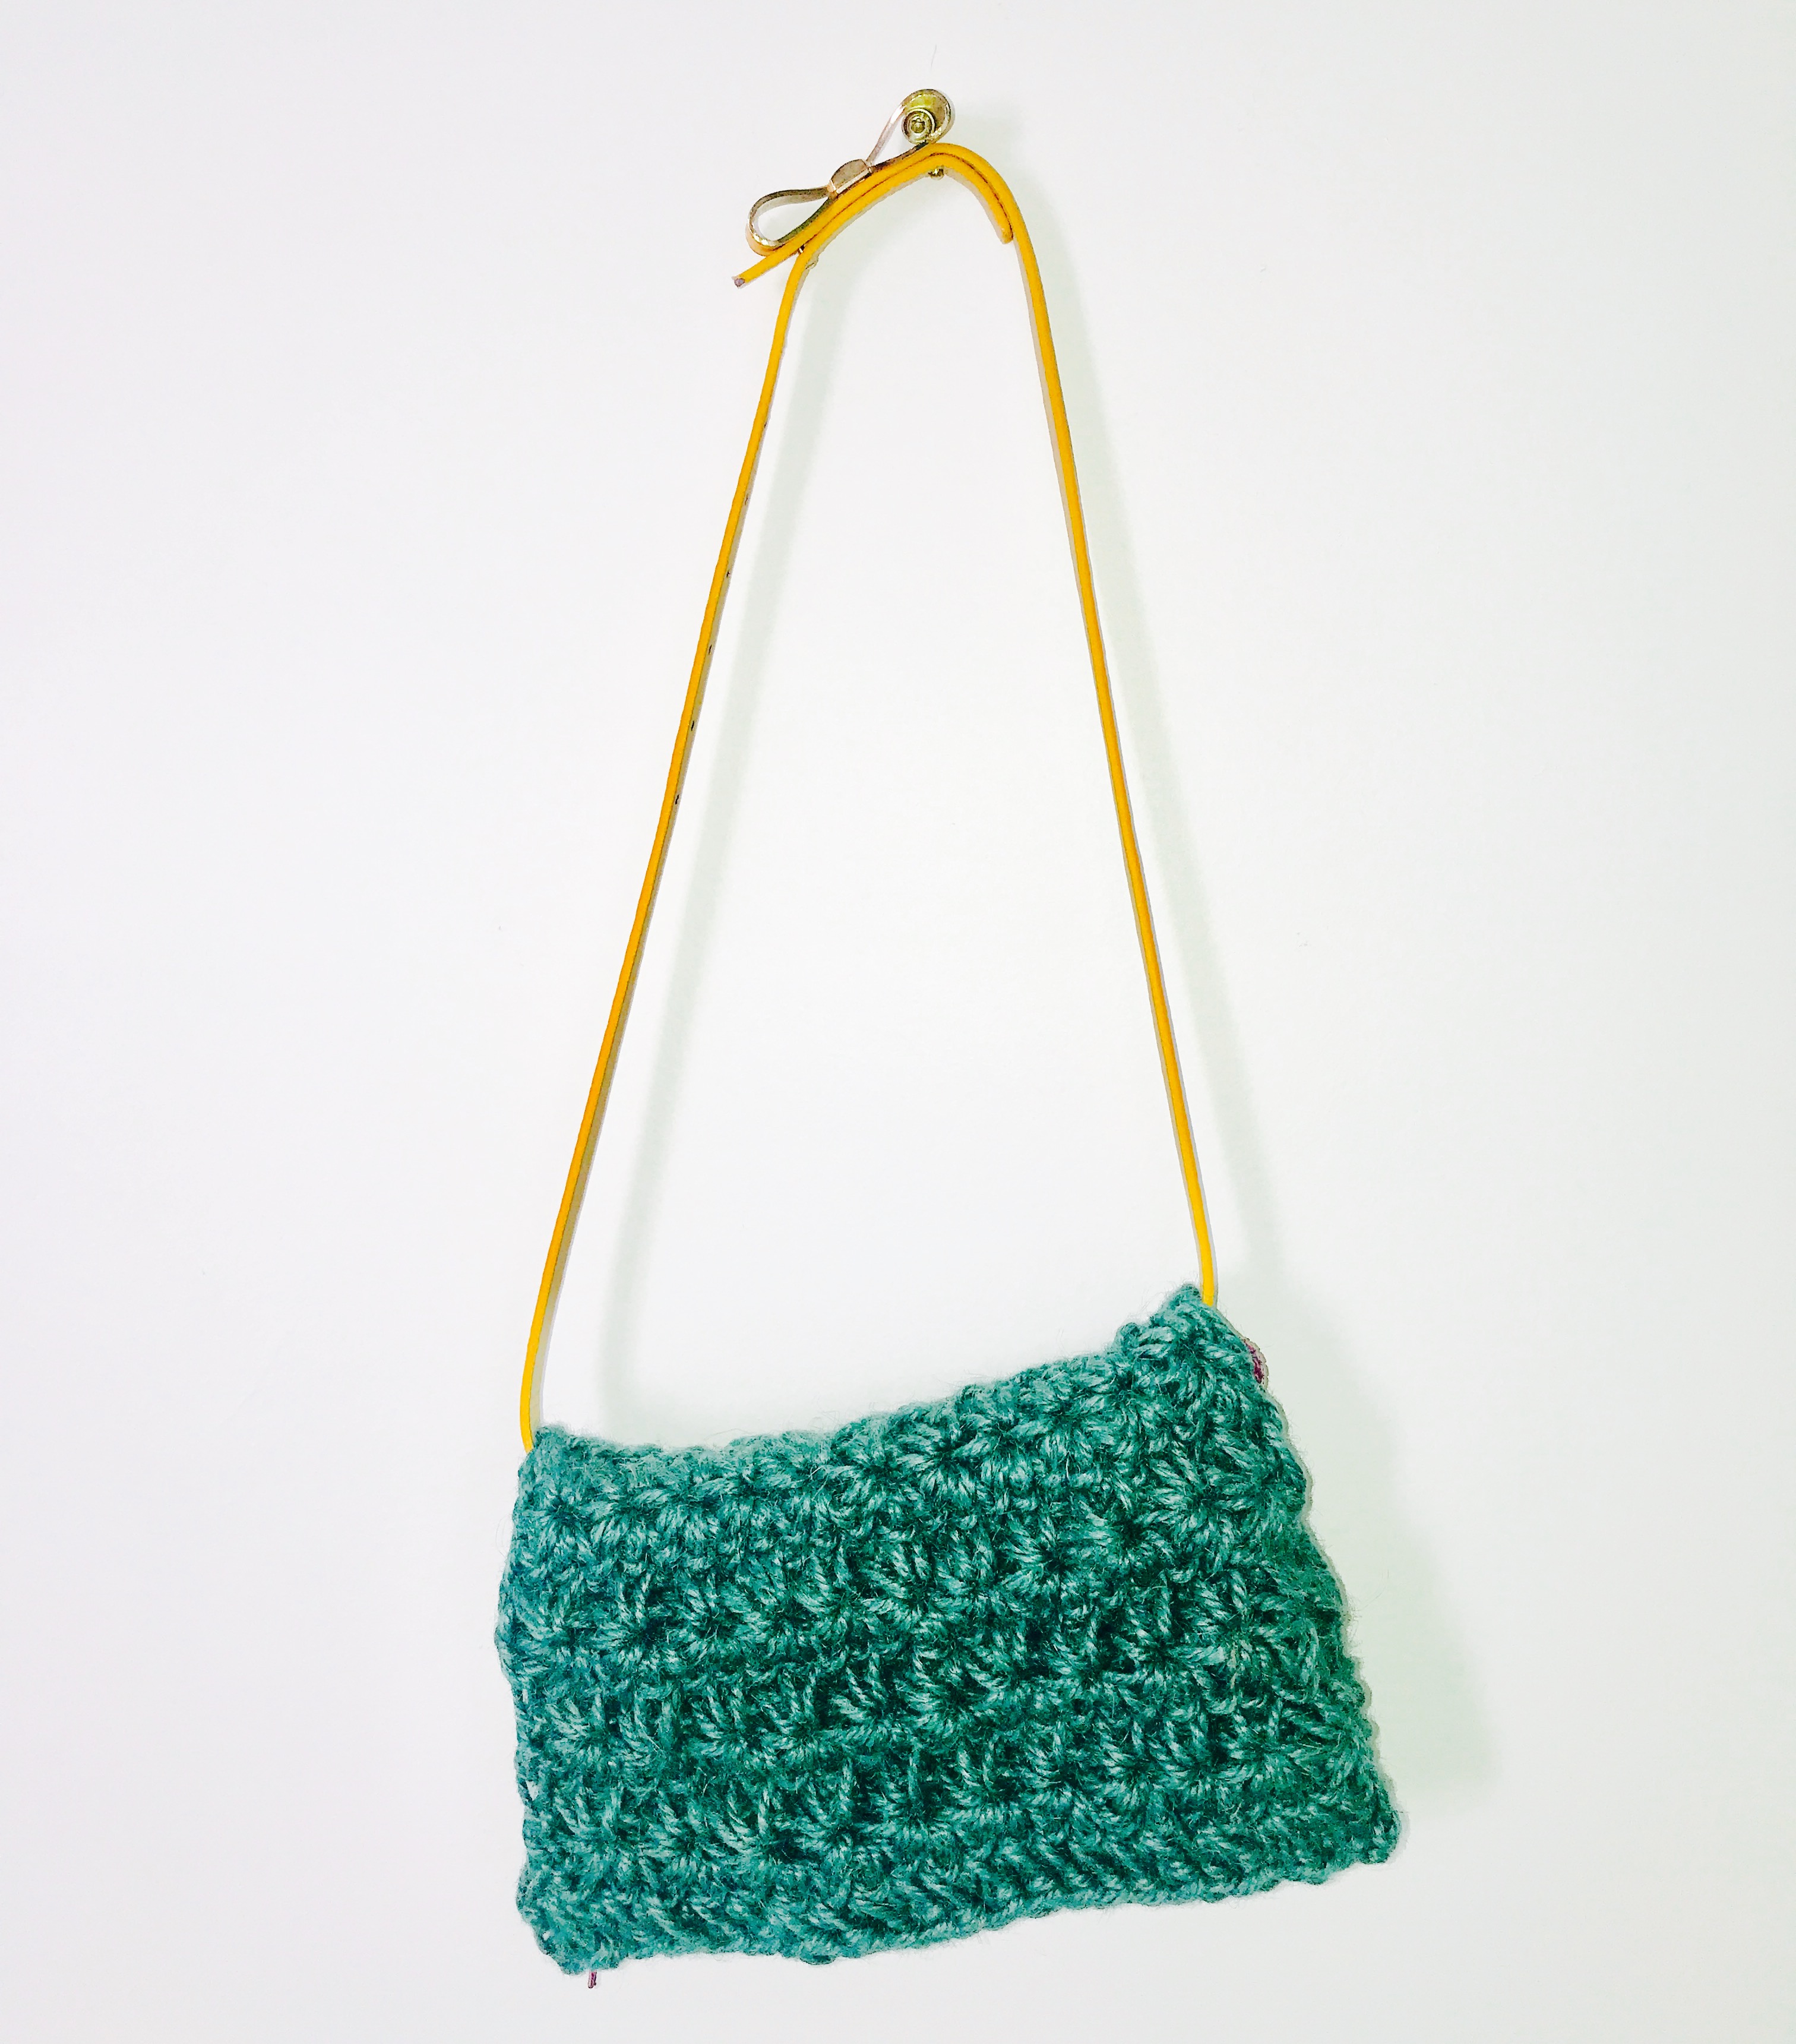 Twine handbag crochet after myfixituplife